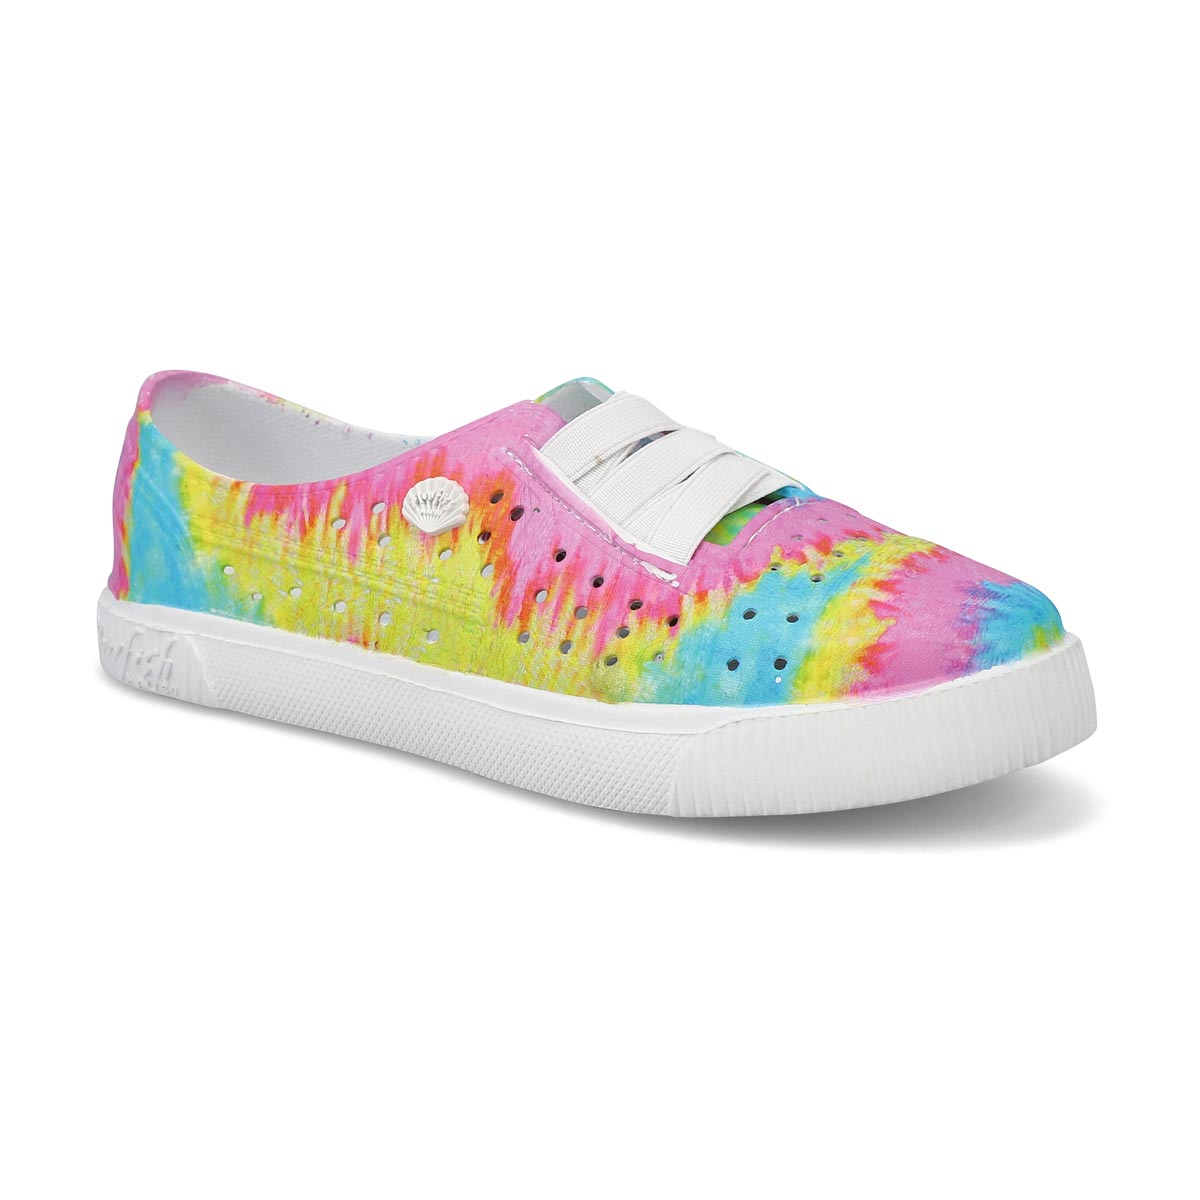 Blowfish Malibu Girls' Rioo Sneakers - Pastel | SoftMoc.com